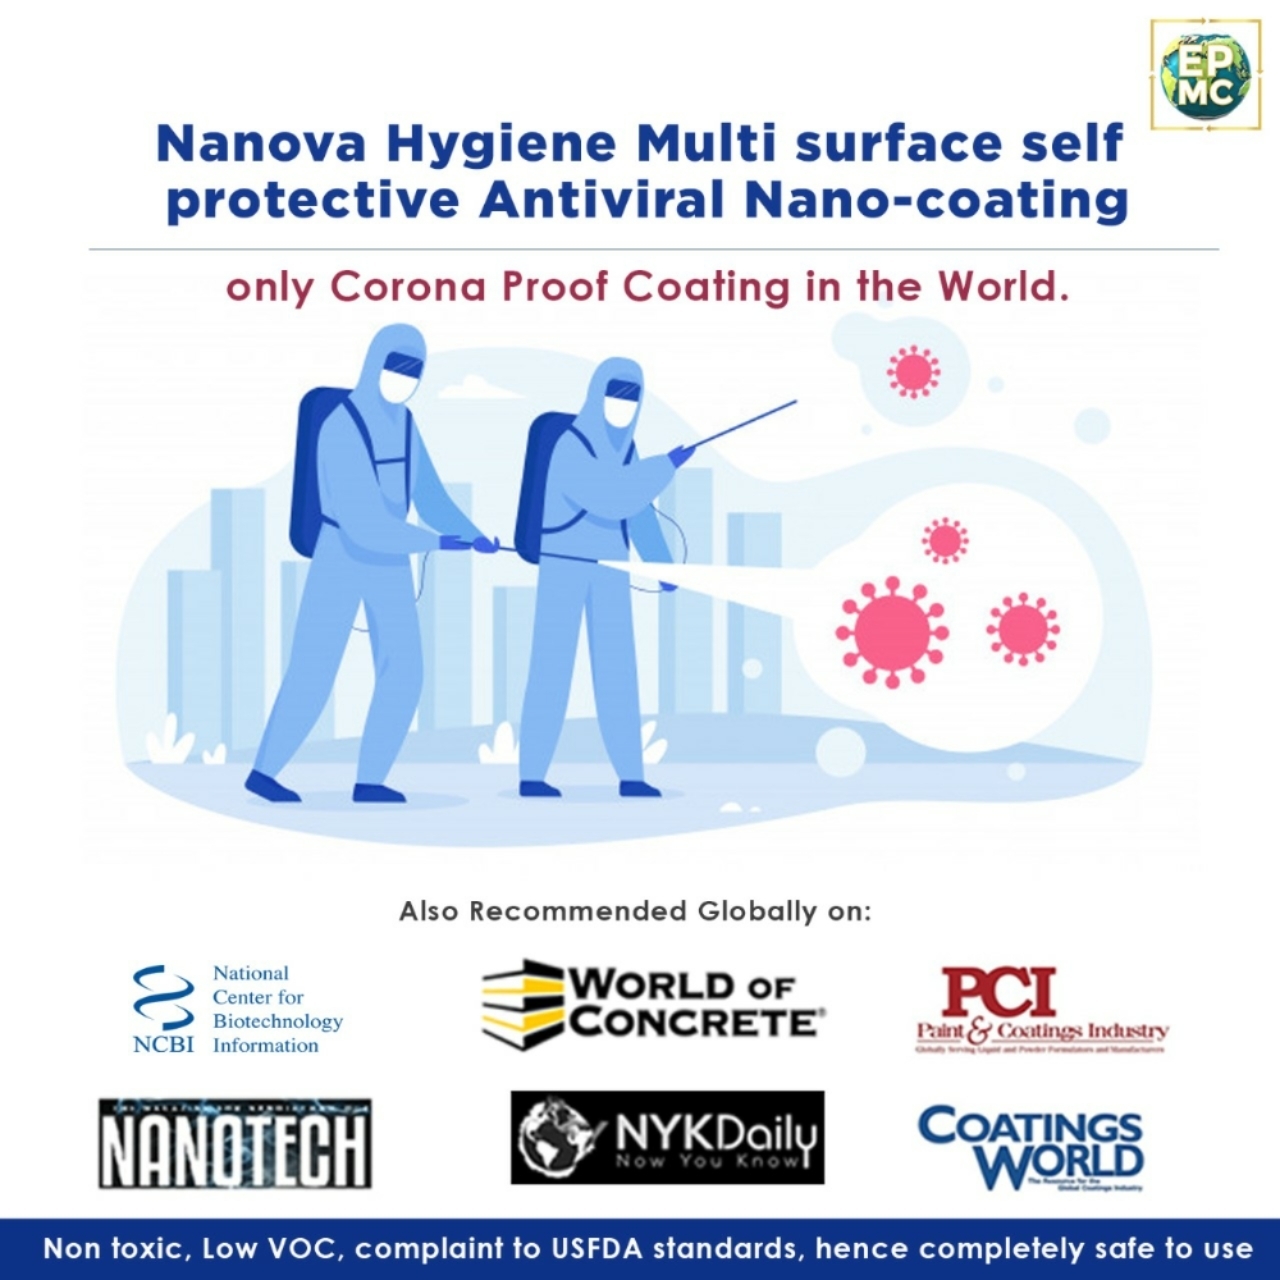 Nanova Hygiene Multi surface self protective Antiviral Nano-coating